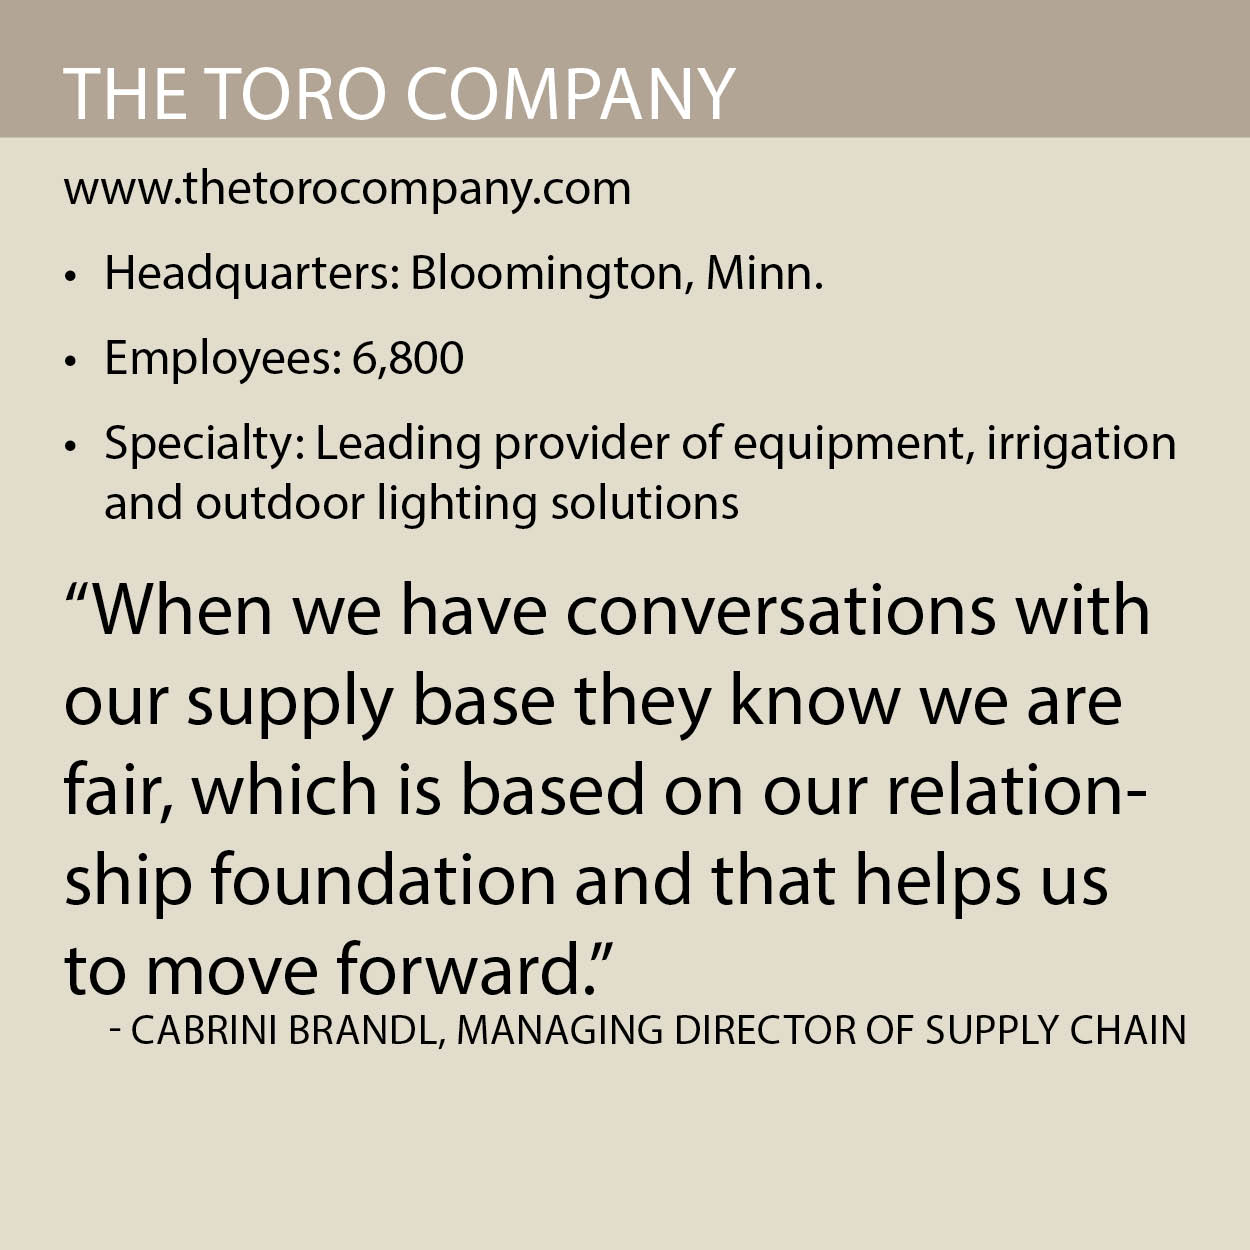 The Toro Company fact box